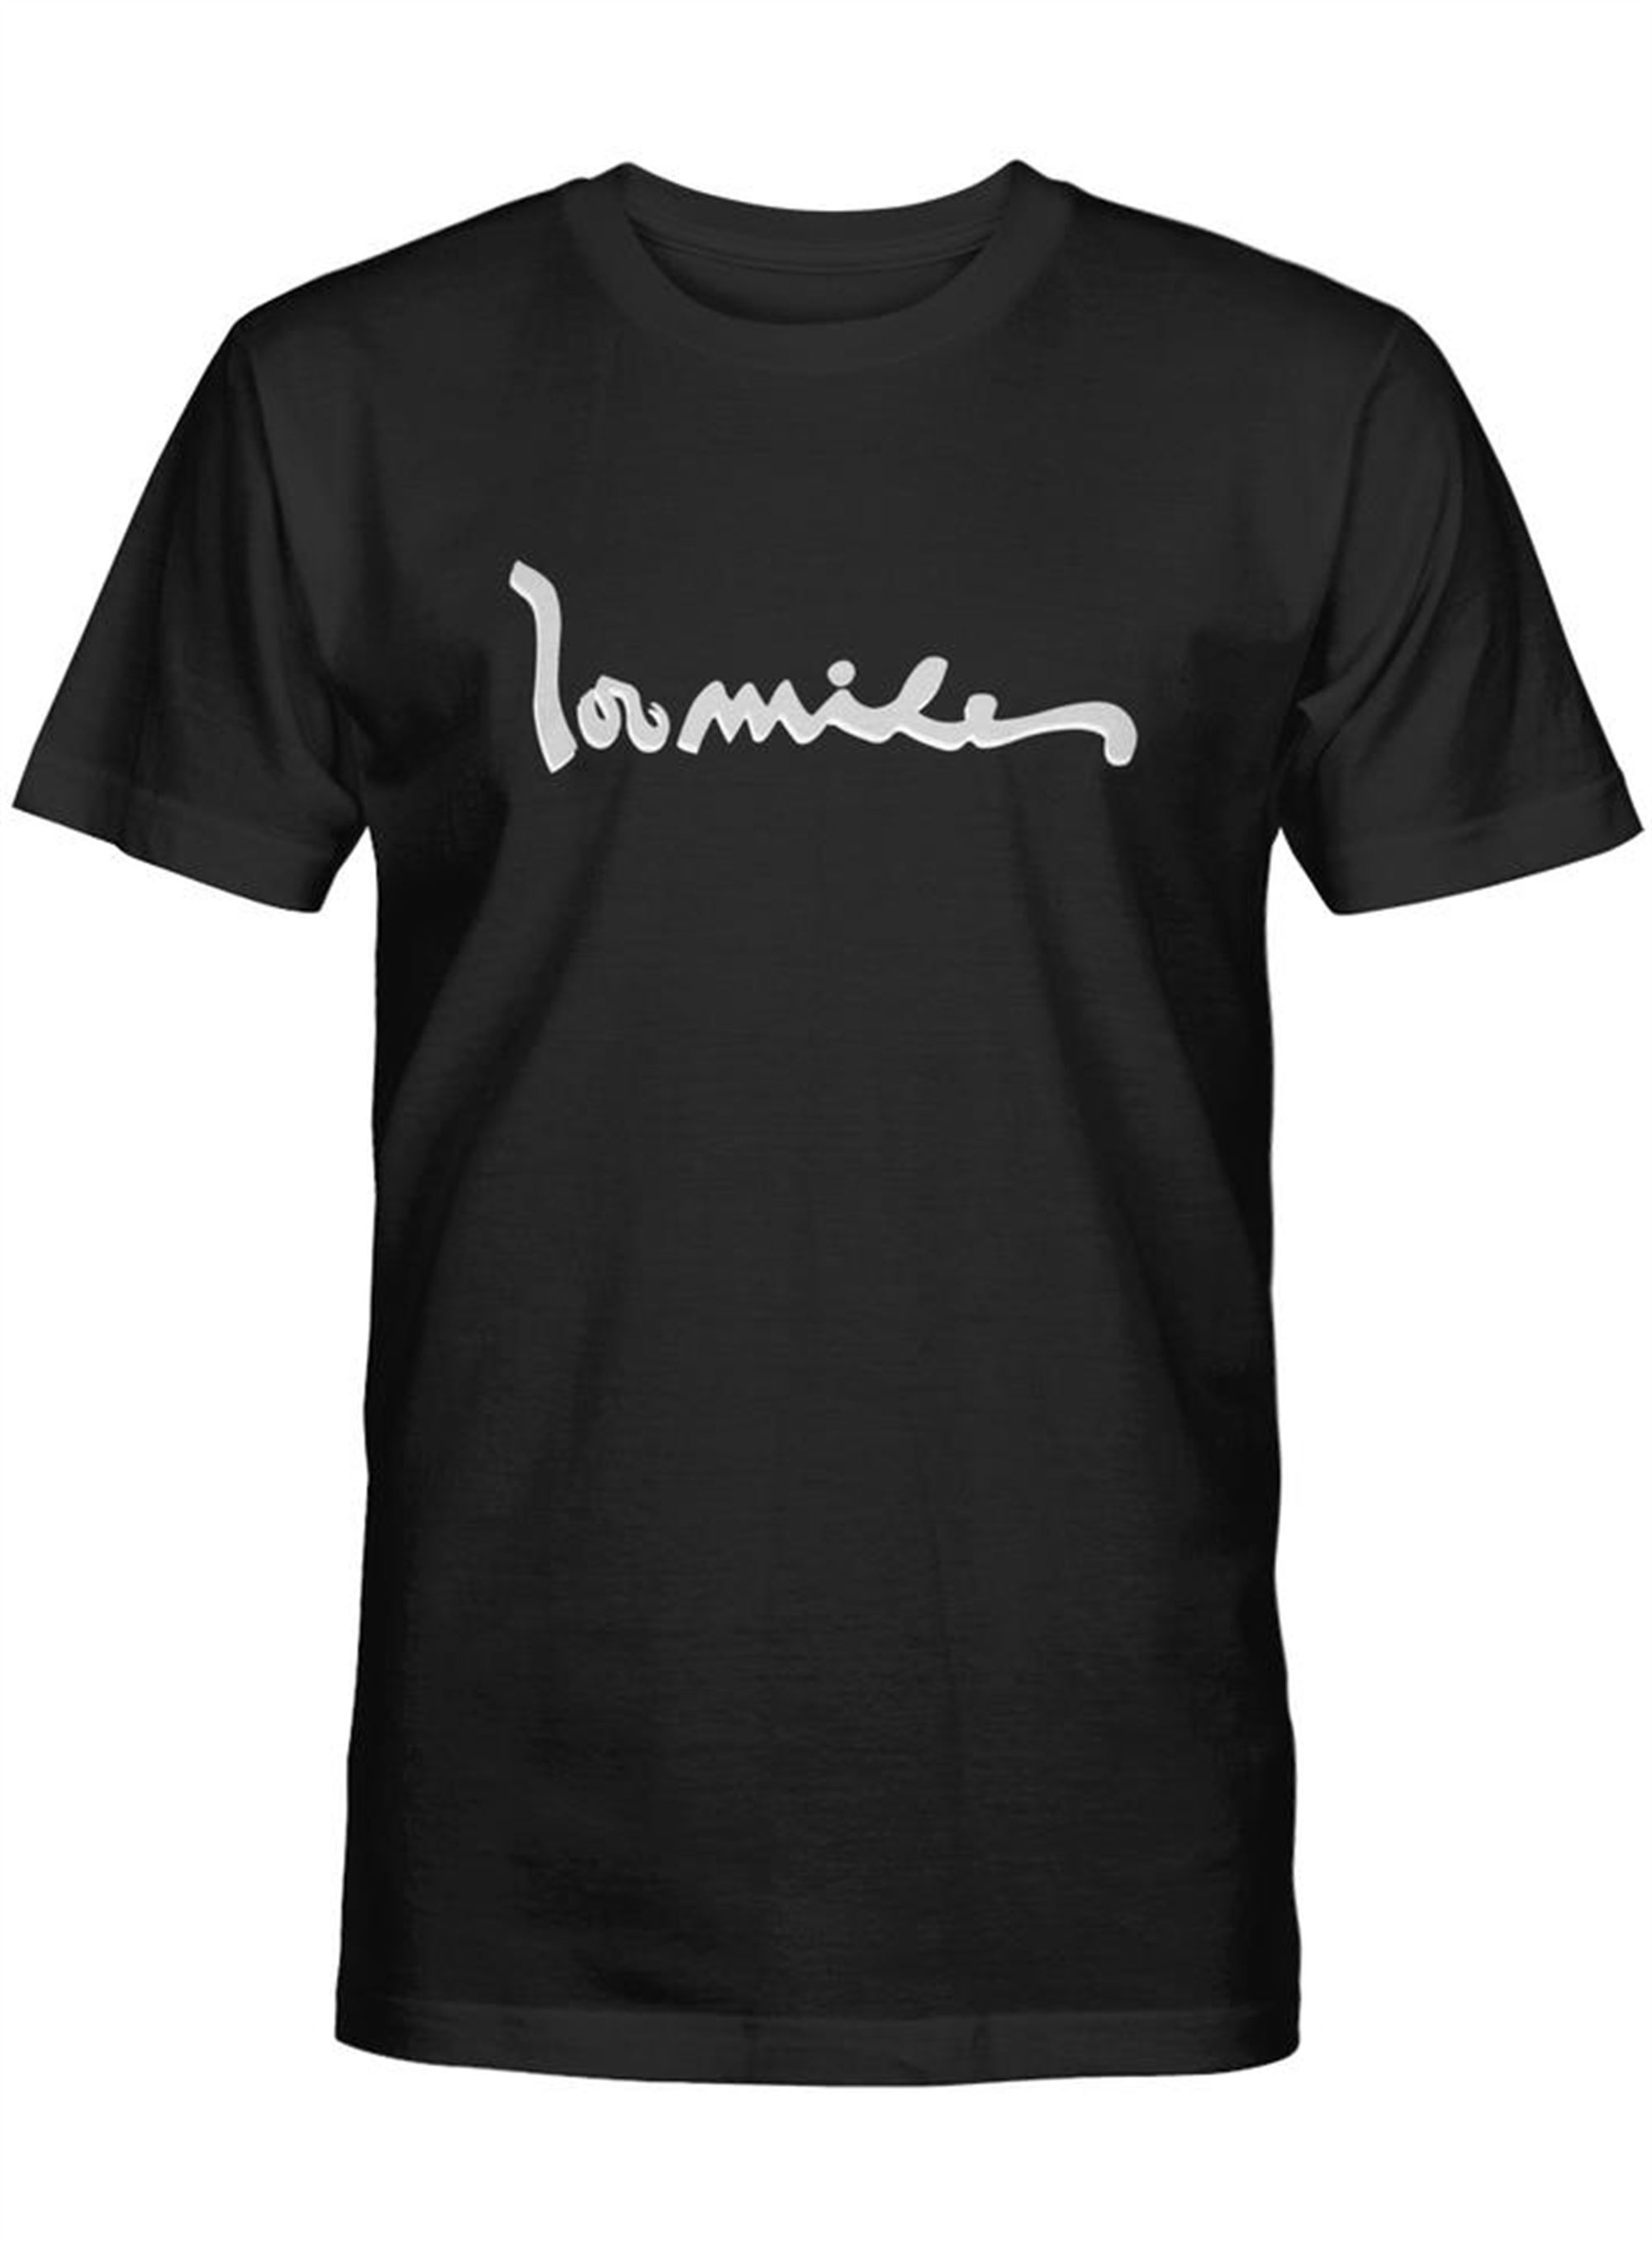 Miles Kawhi Me A River T-shirt Plus Size Up To 5x